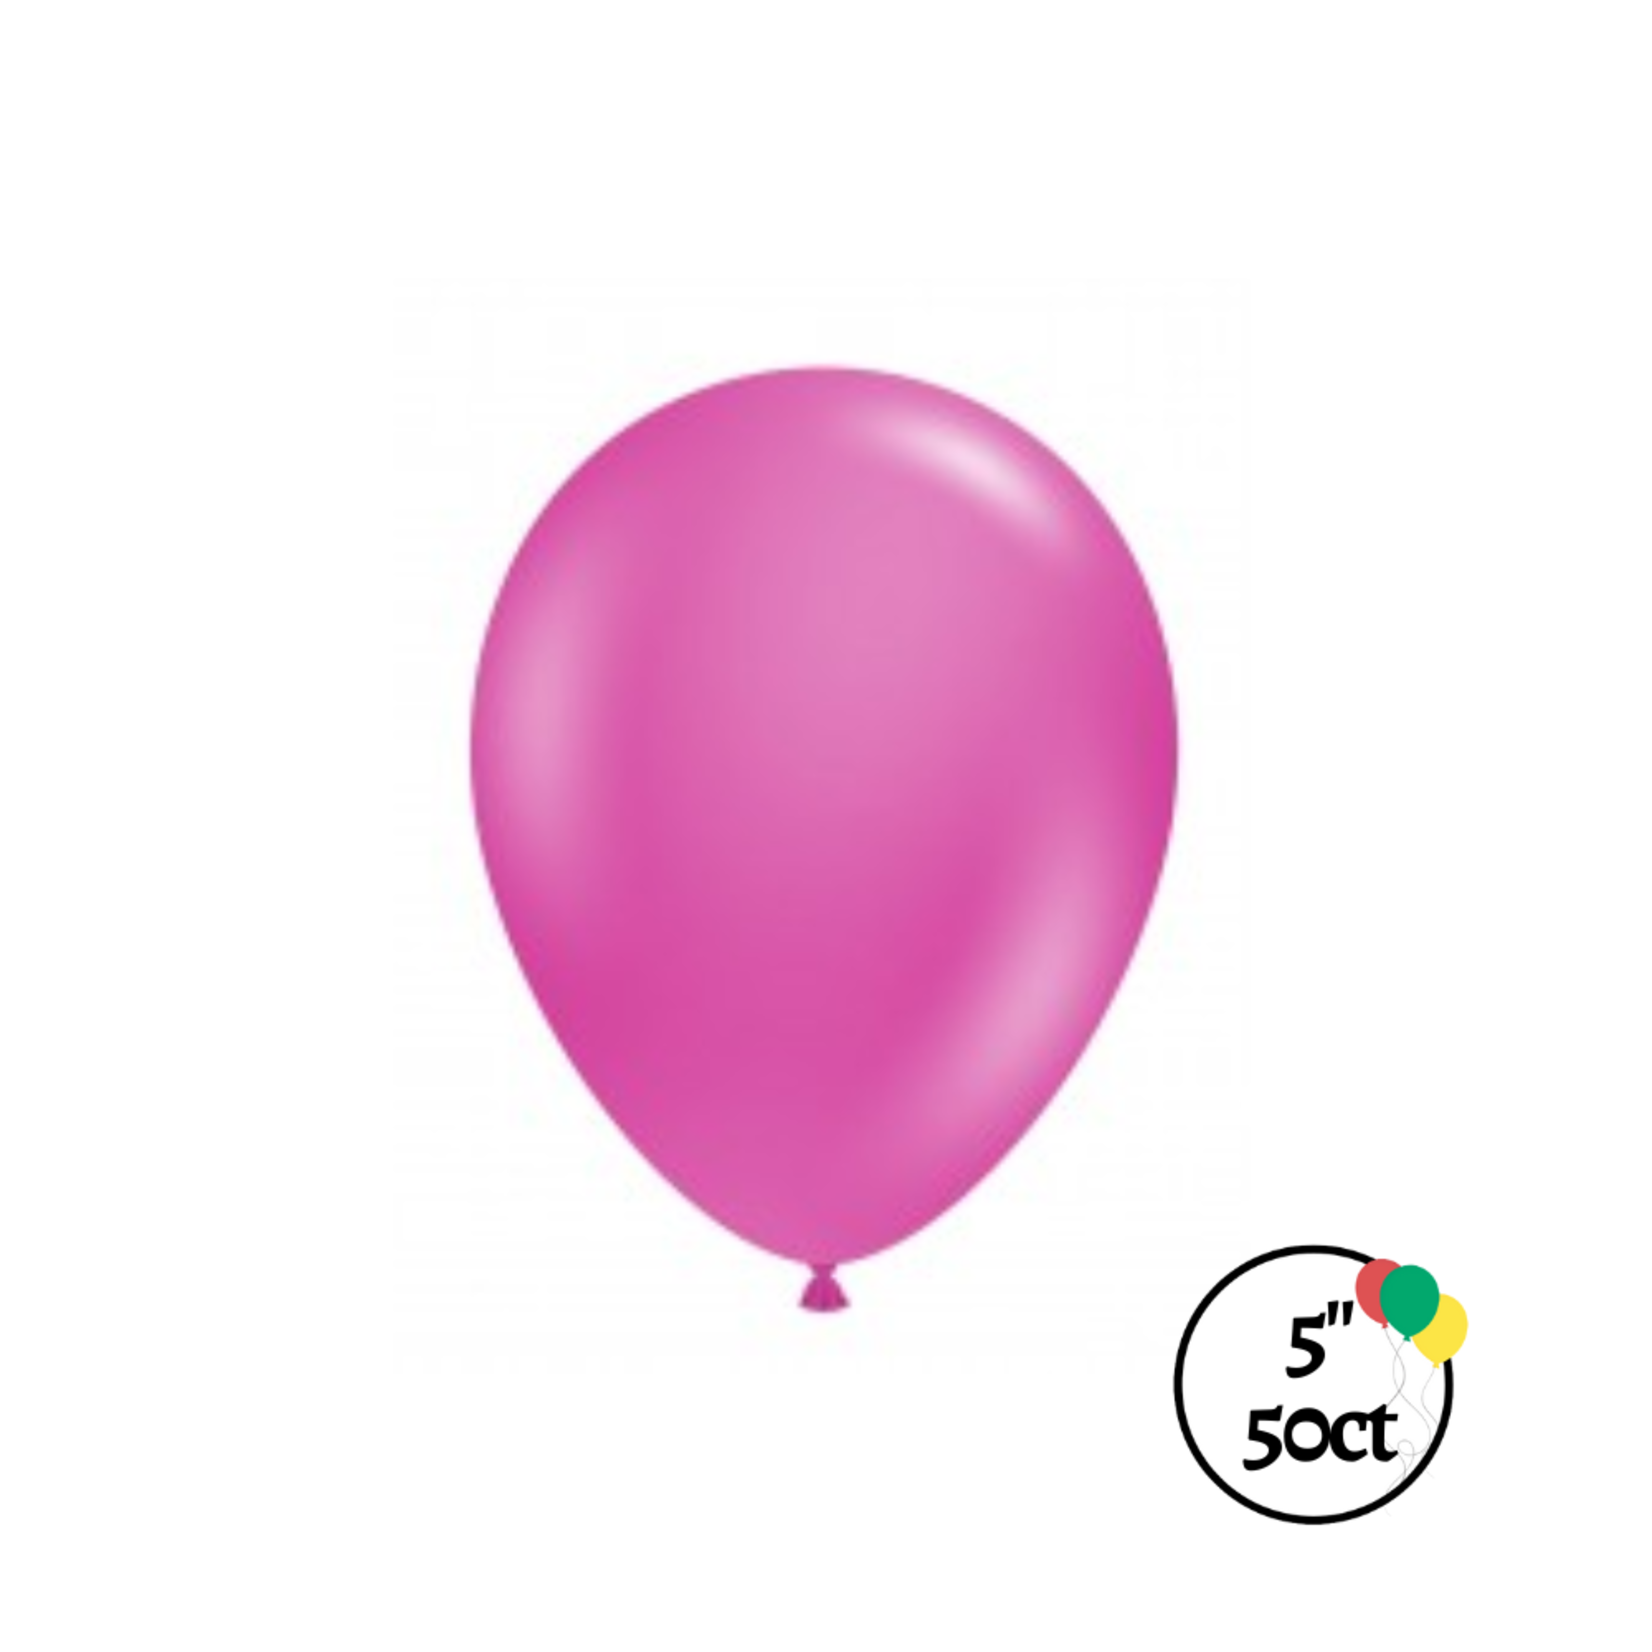 Tuftex 5" Tuftex Pixie 50ct Balloon